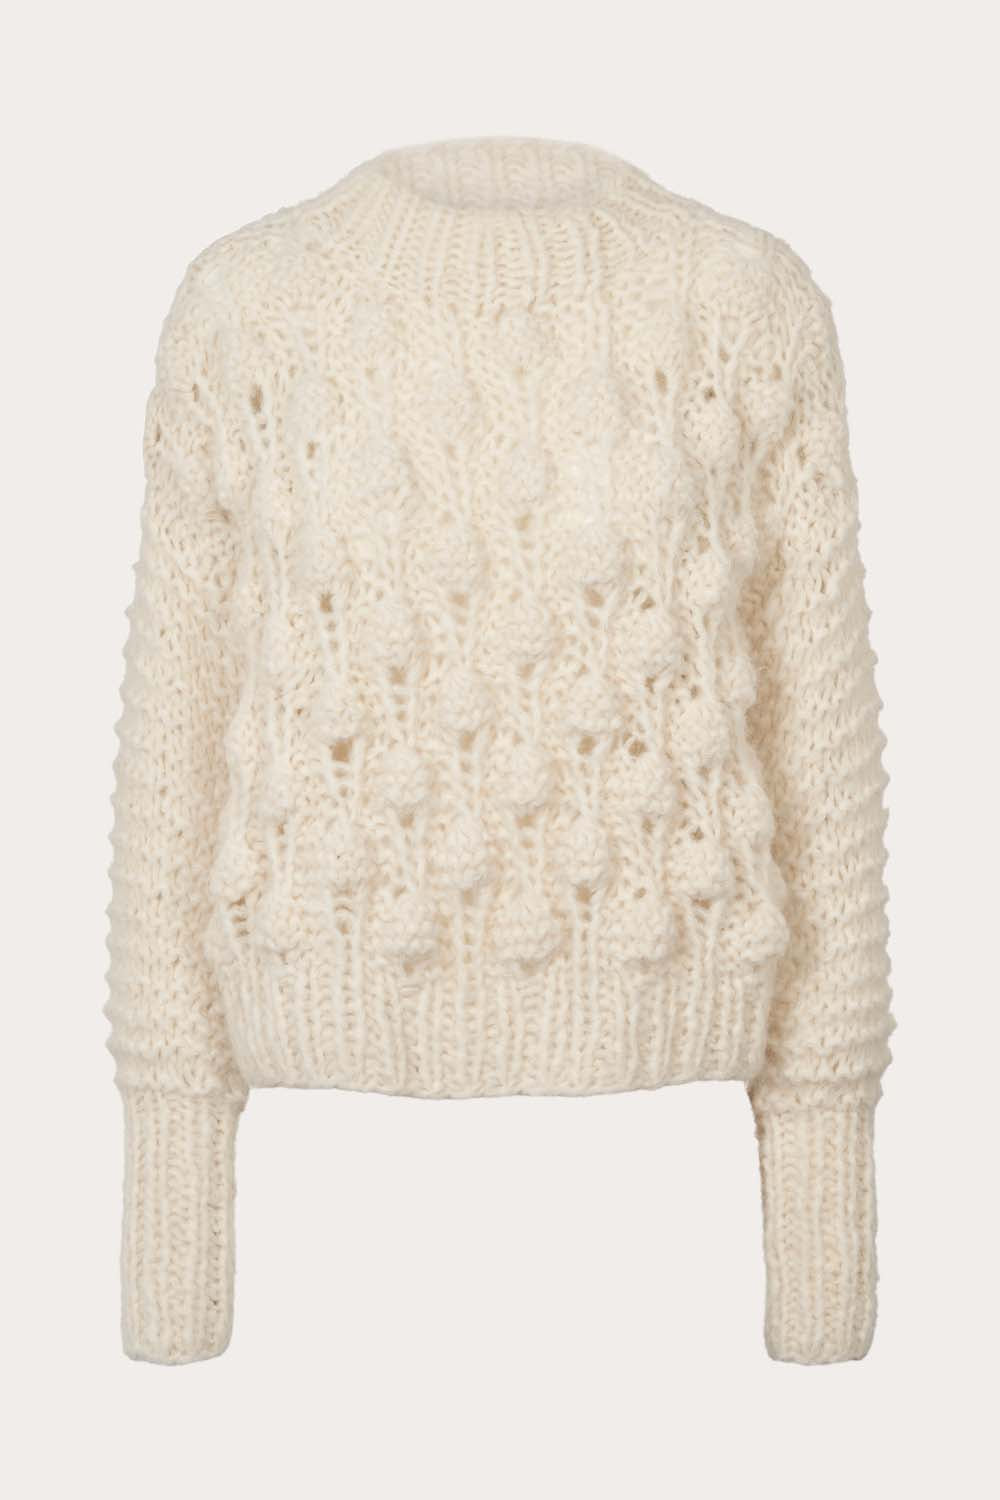 O'TAY Damaris Sweater Bluser Off White